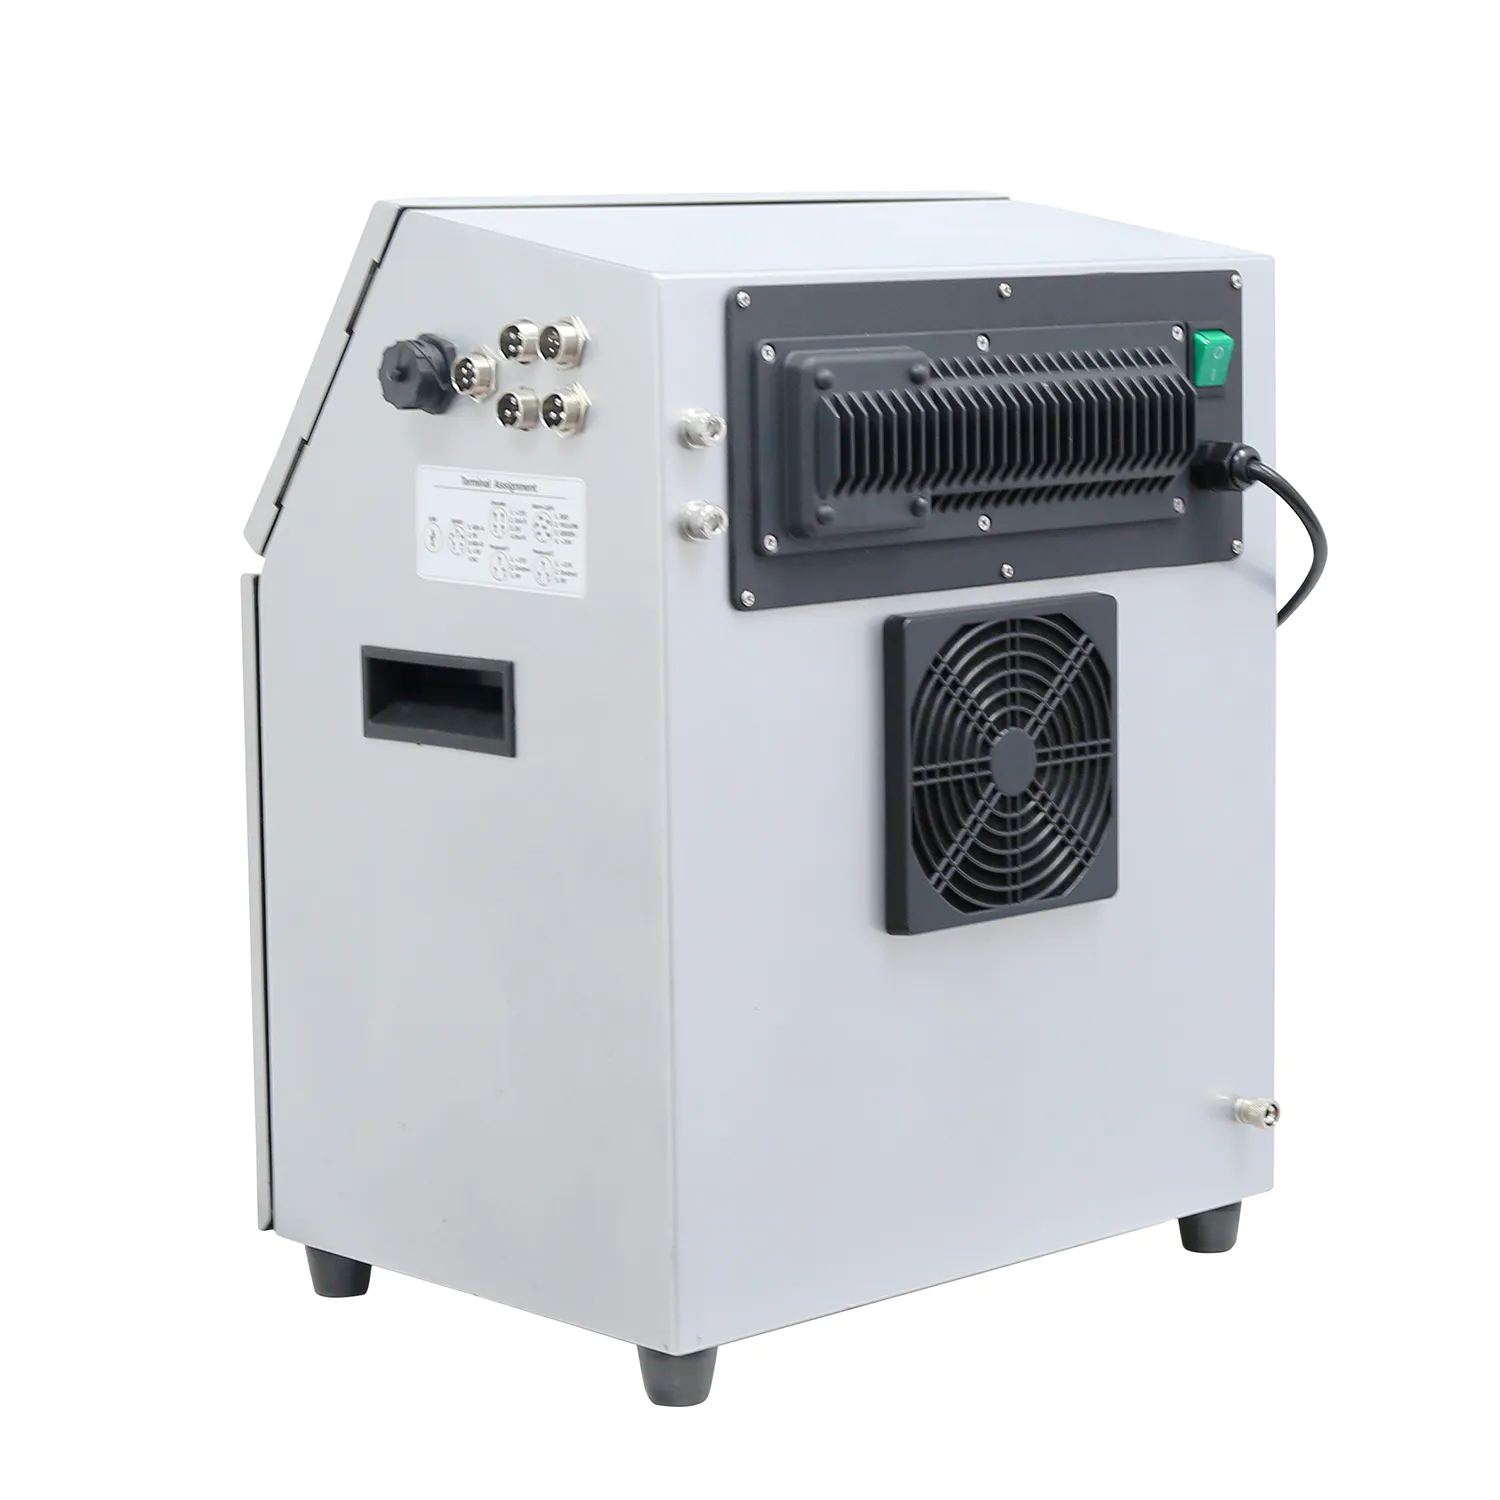 Lead Tech Lt800 Digital Printing Eco Solvent Printer